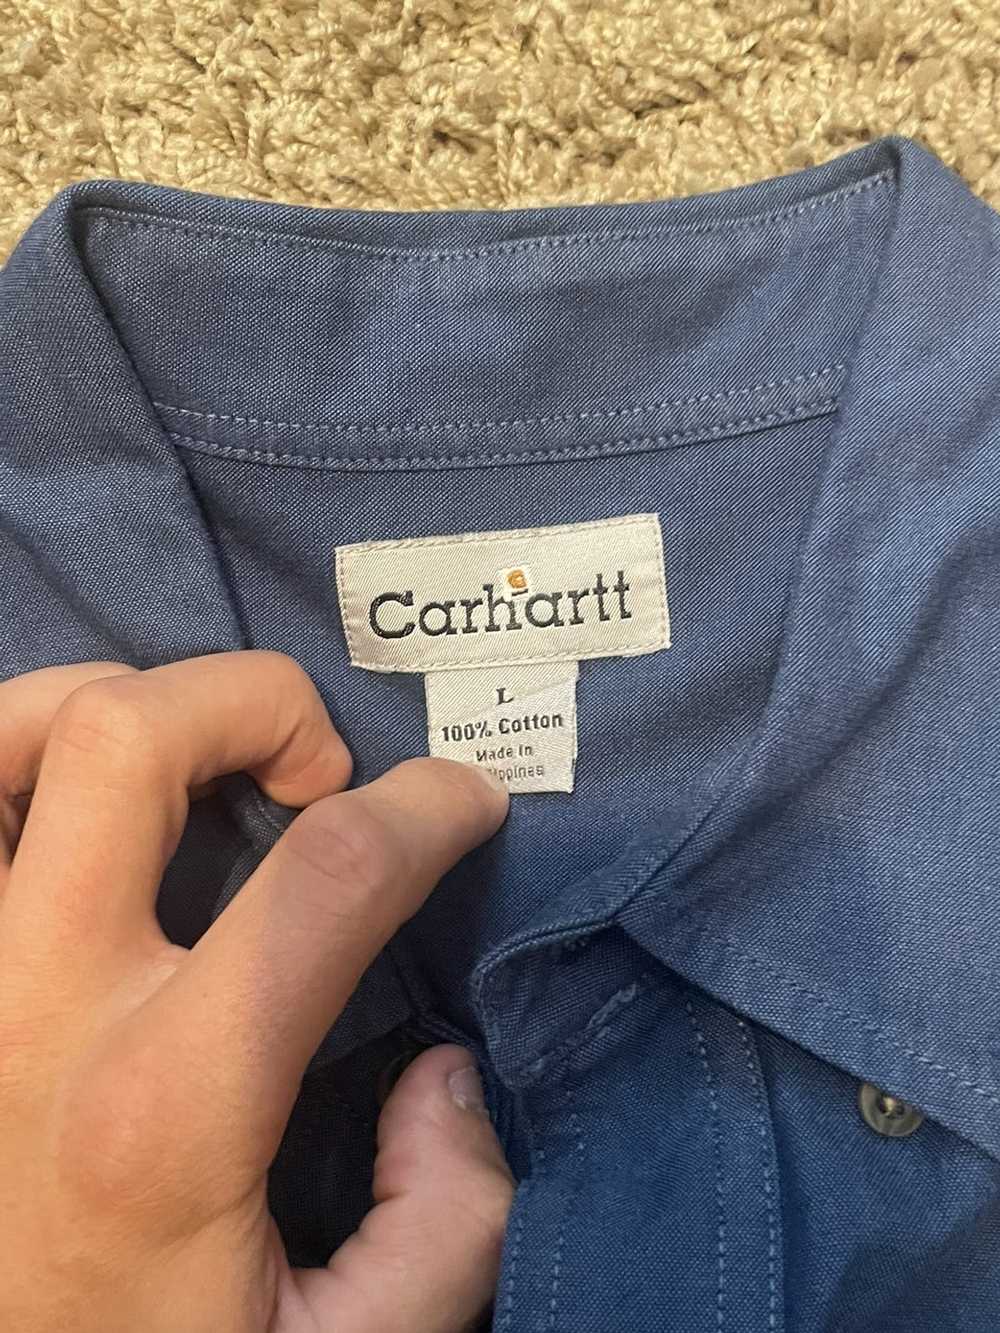 Carhartt × Vintage Vintage carharrt button up - image 3